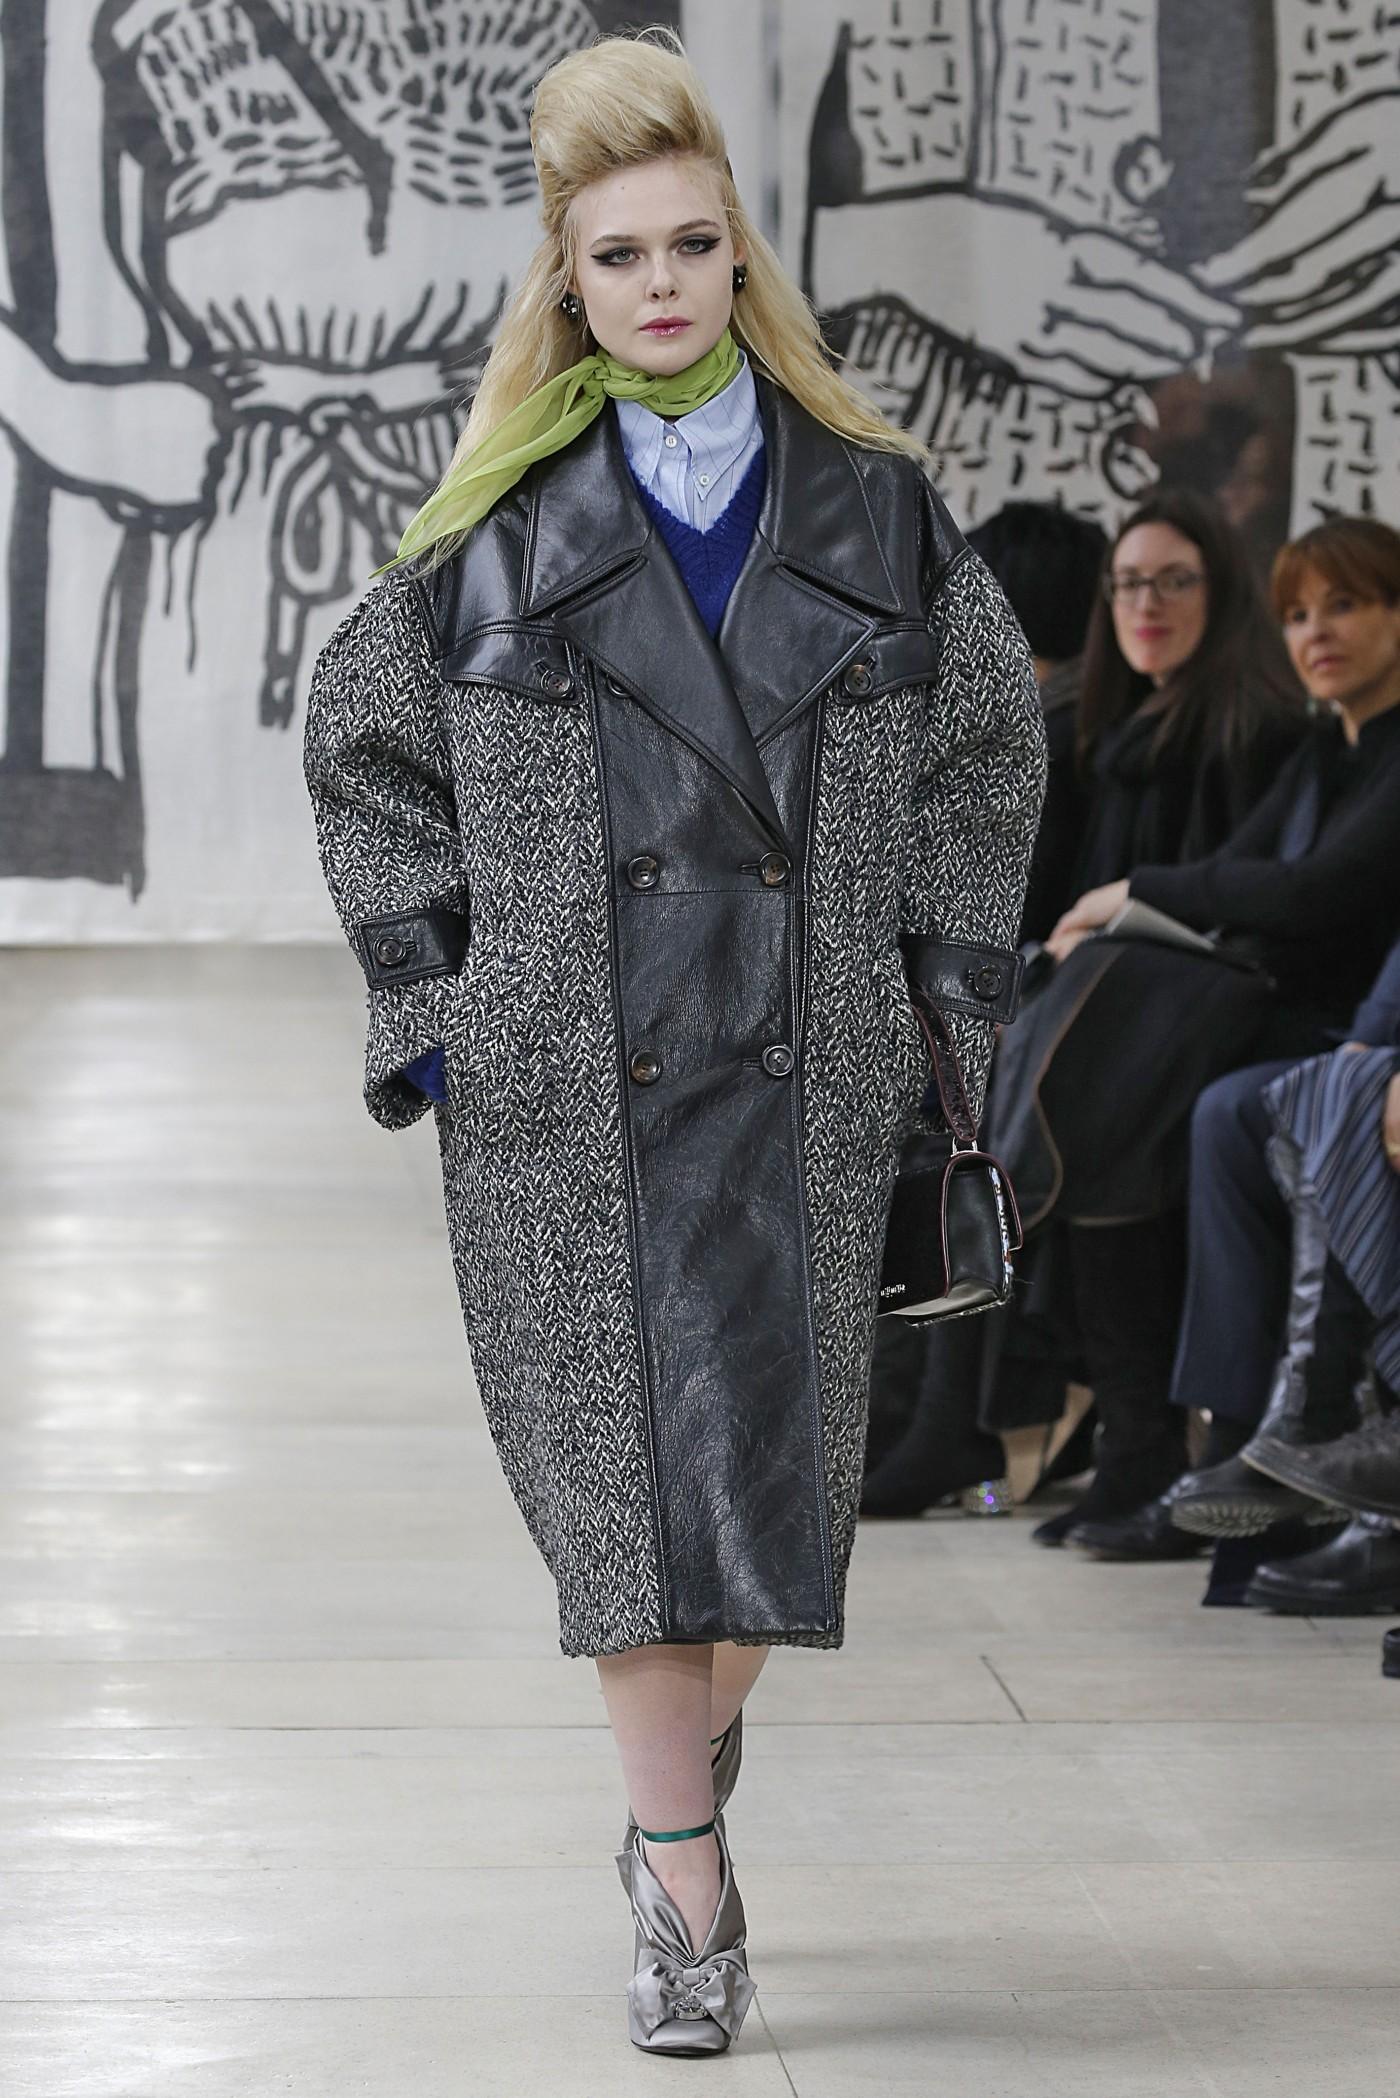 Elle Fanning Turns a Miu Miu Shopping Bag into a Major Fashion Moment